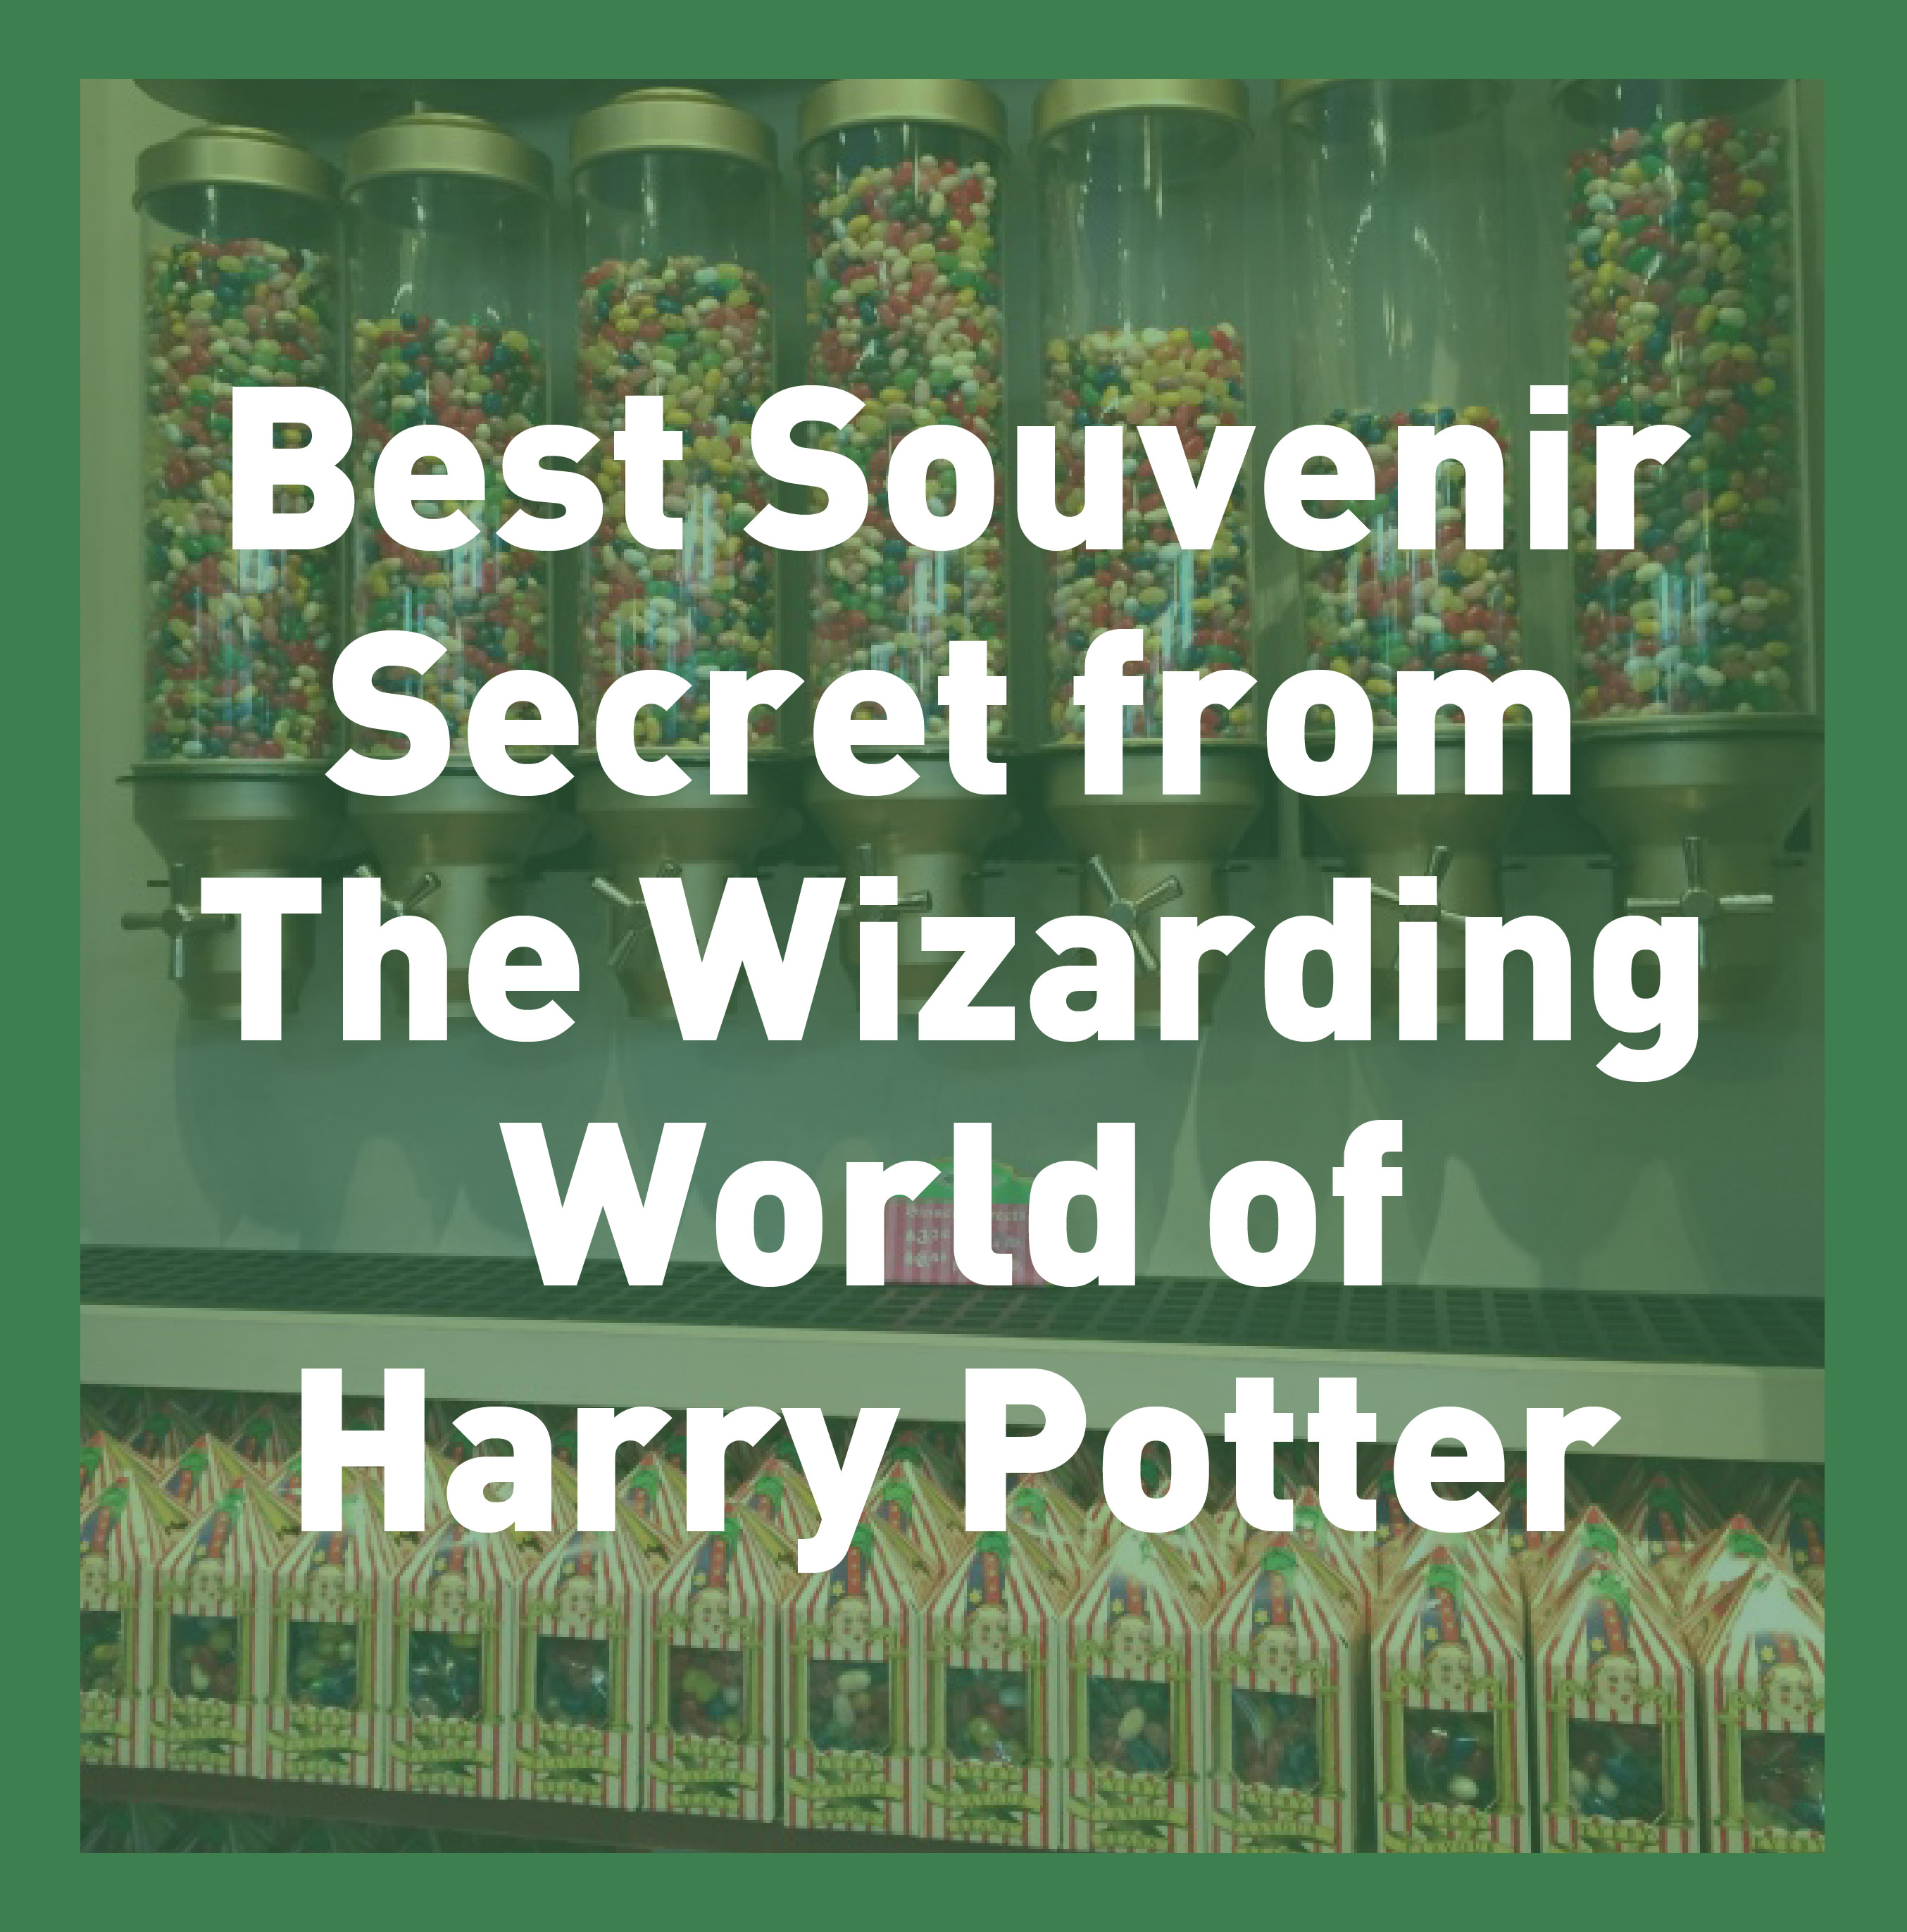 Best Souvenir Secret from The Wizarding World of Harry Potter